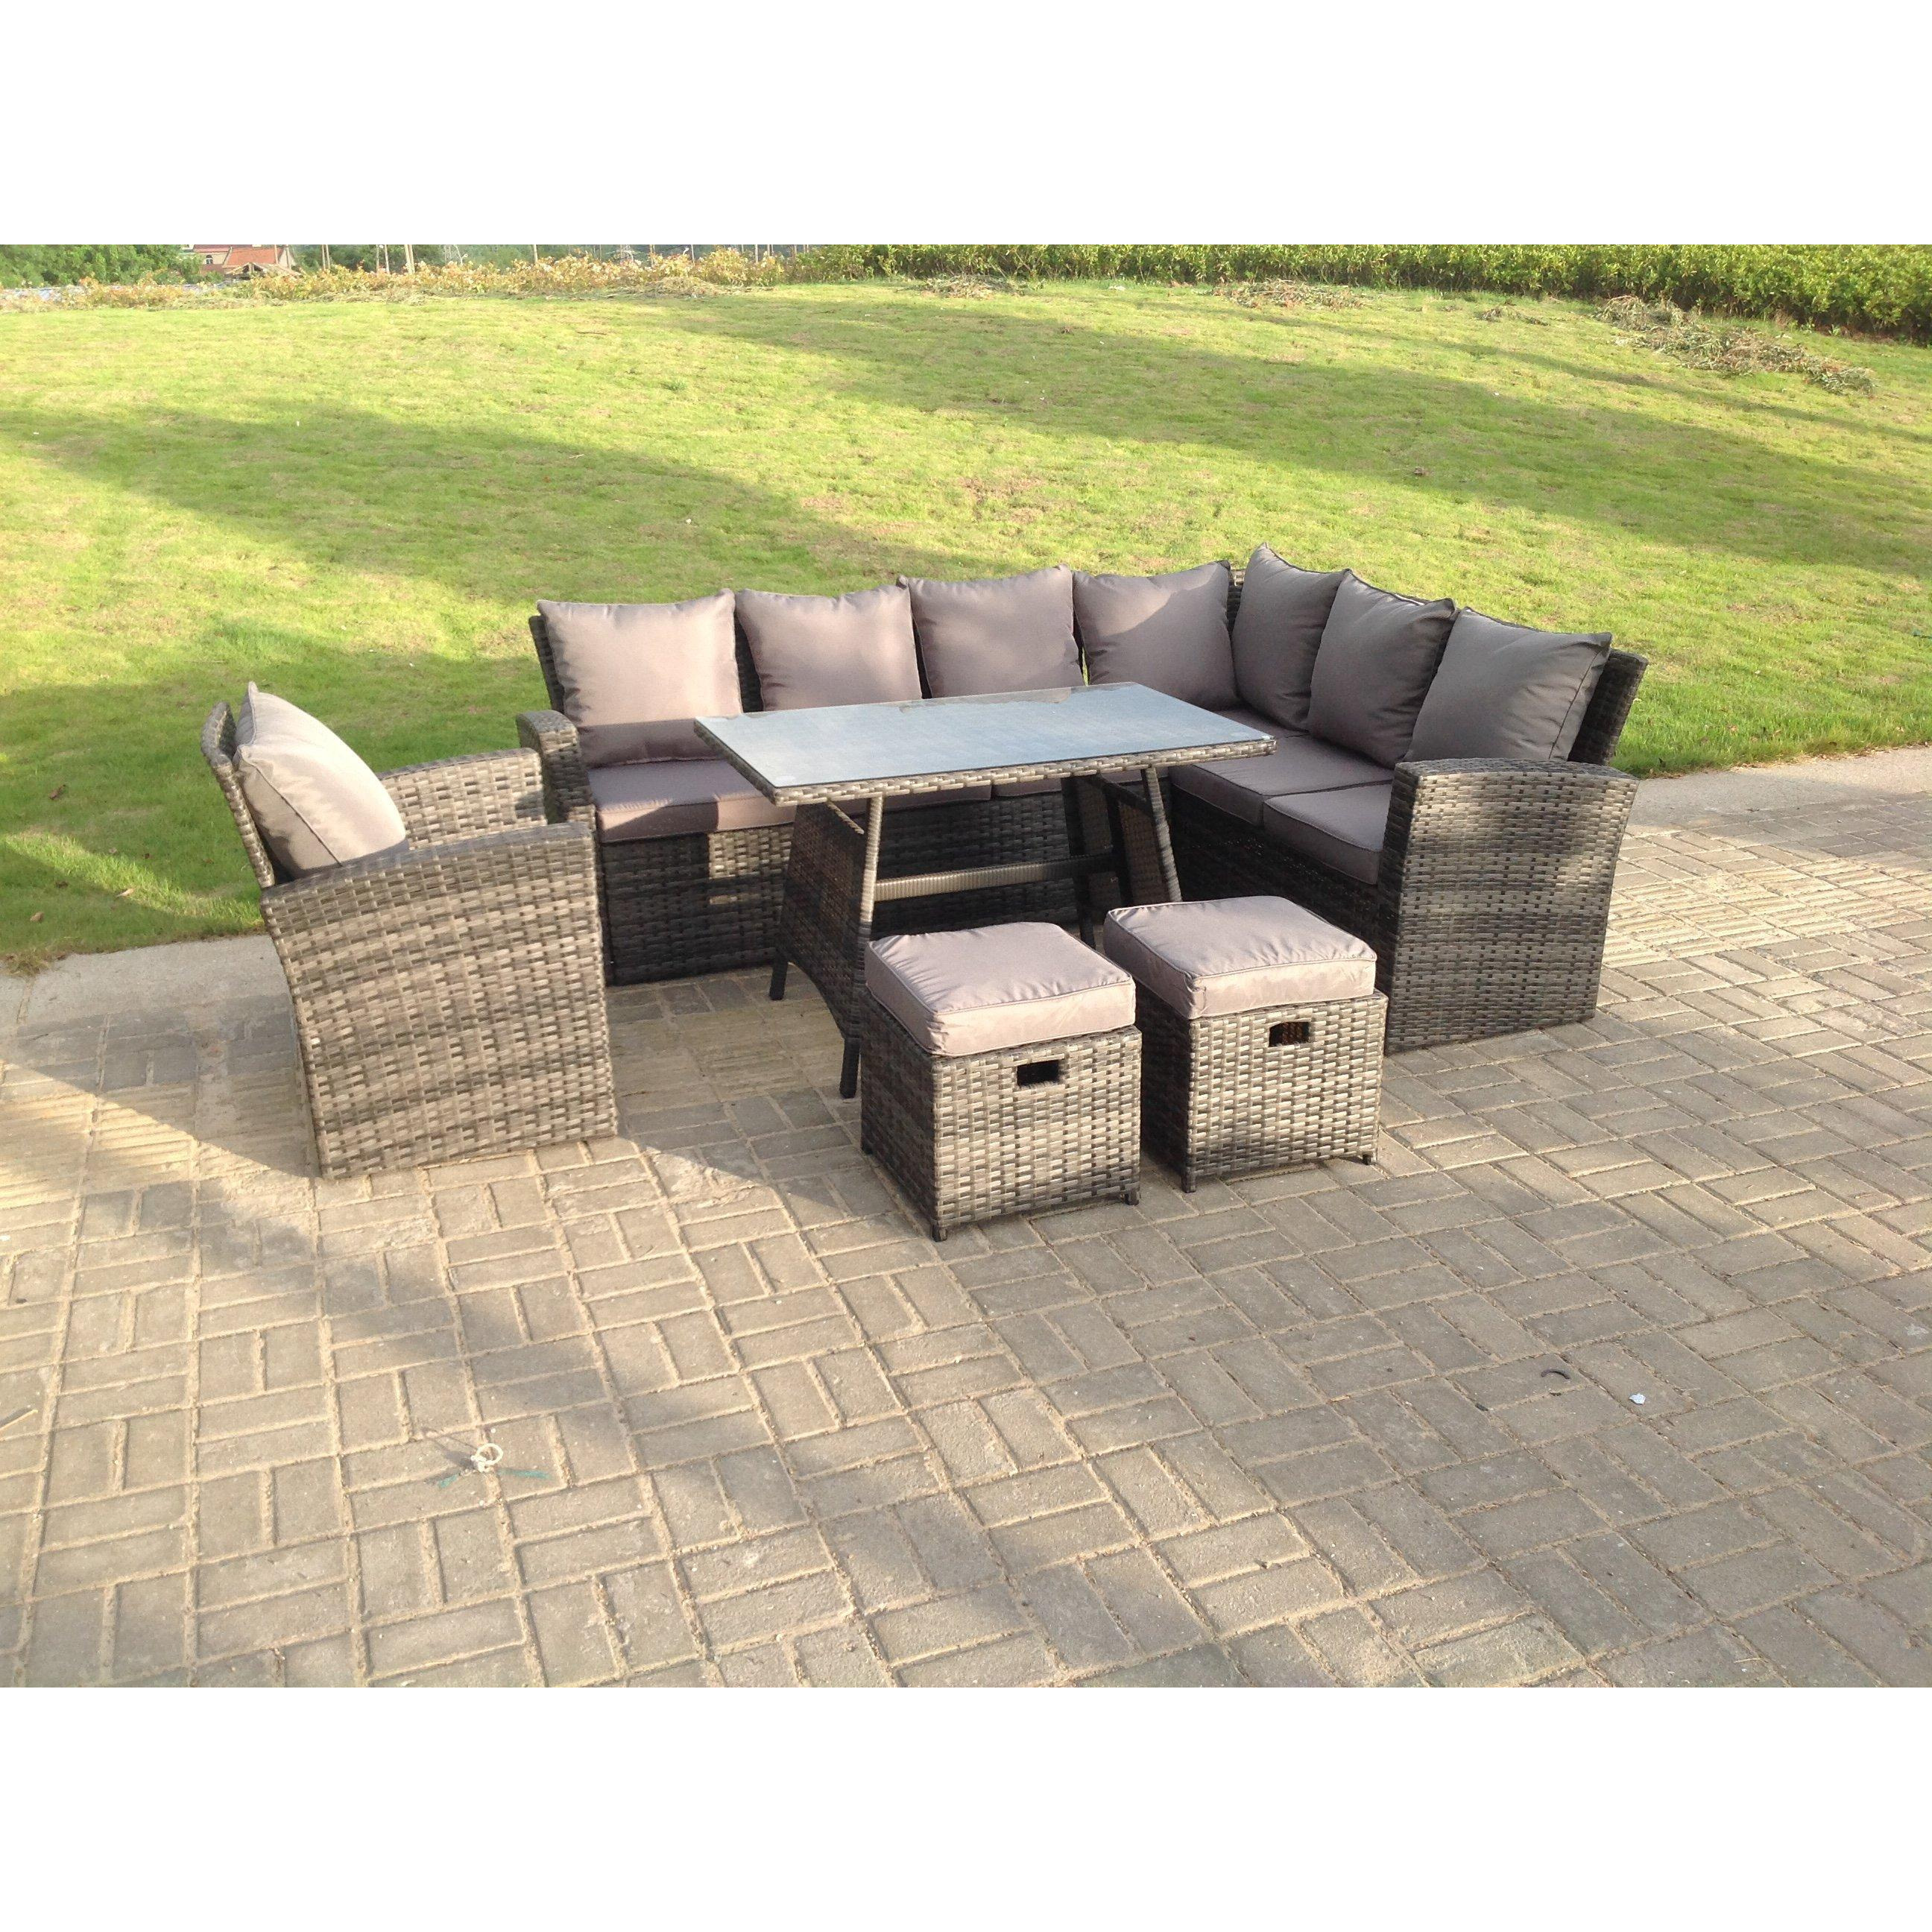 9 Seater High Back Dark Mixed Grey Rattan Corner Sofa Set Outdoor Furniture Rectangular Dining Table - image 1